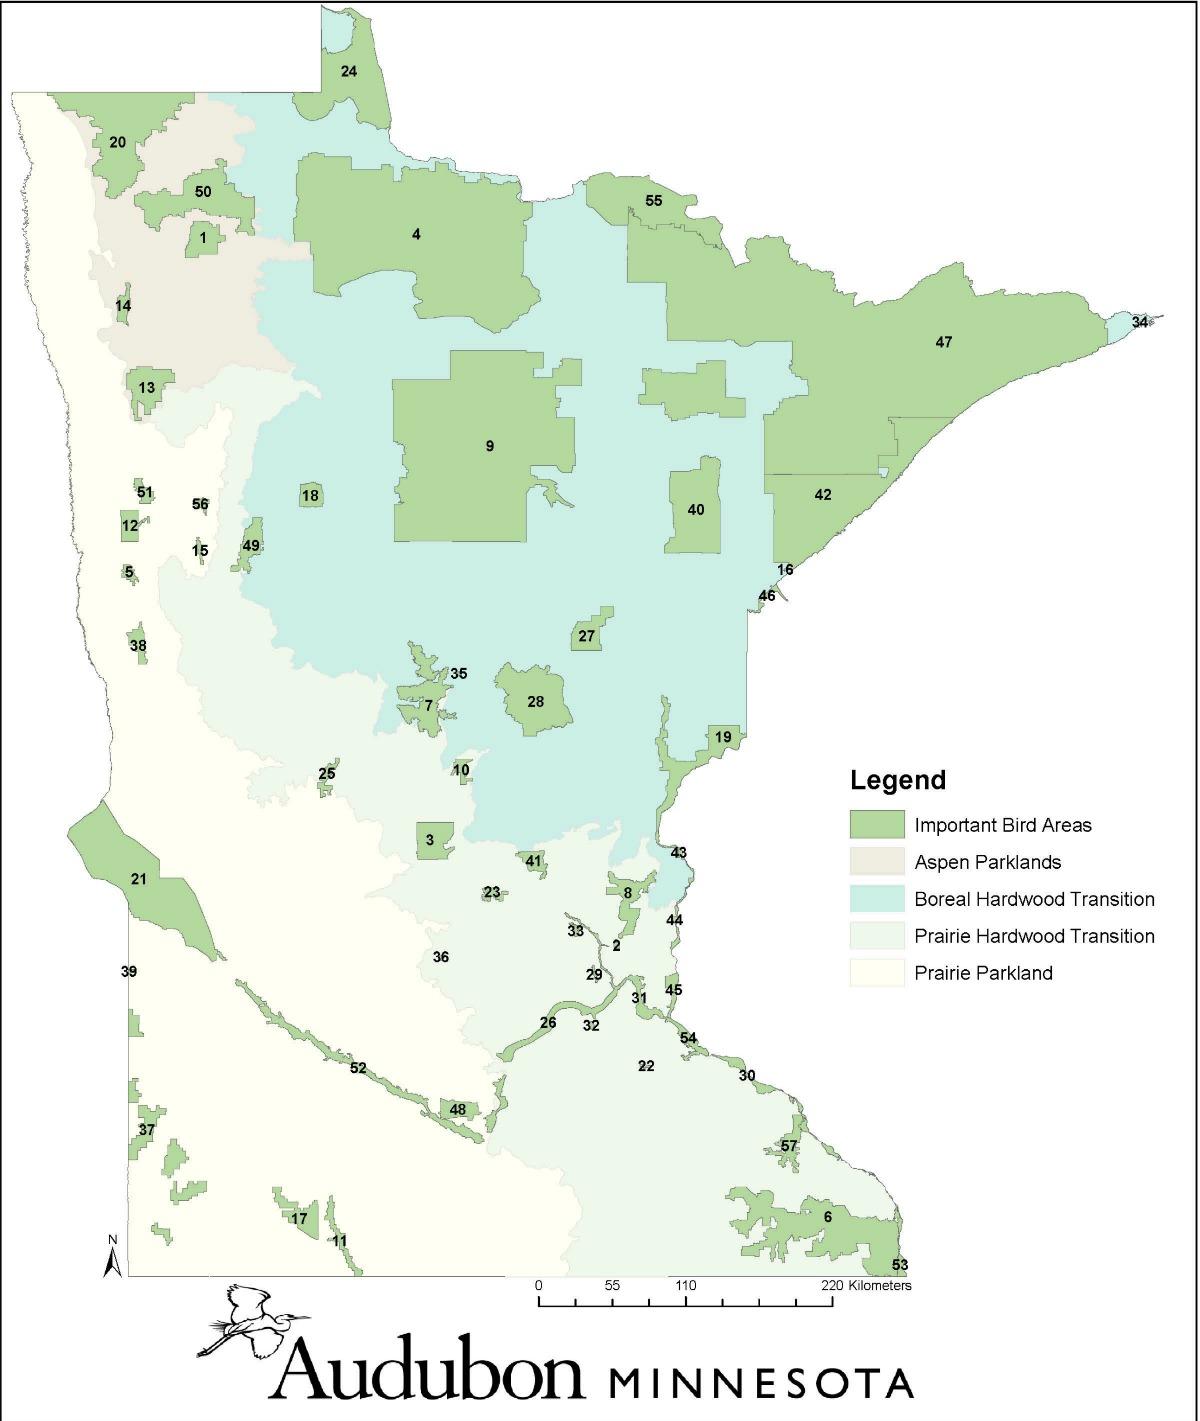 Audubon Minnesota statewide IBAs